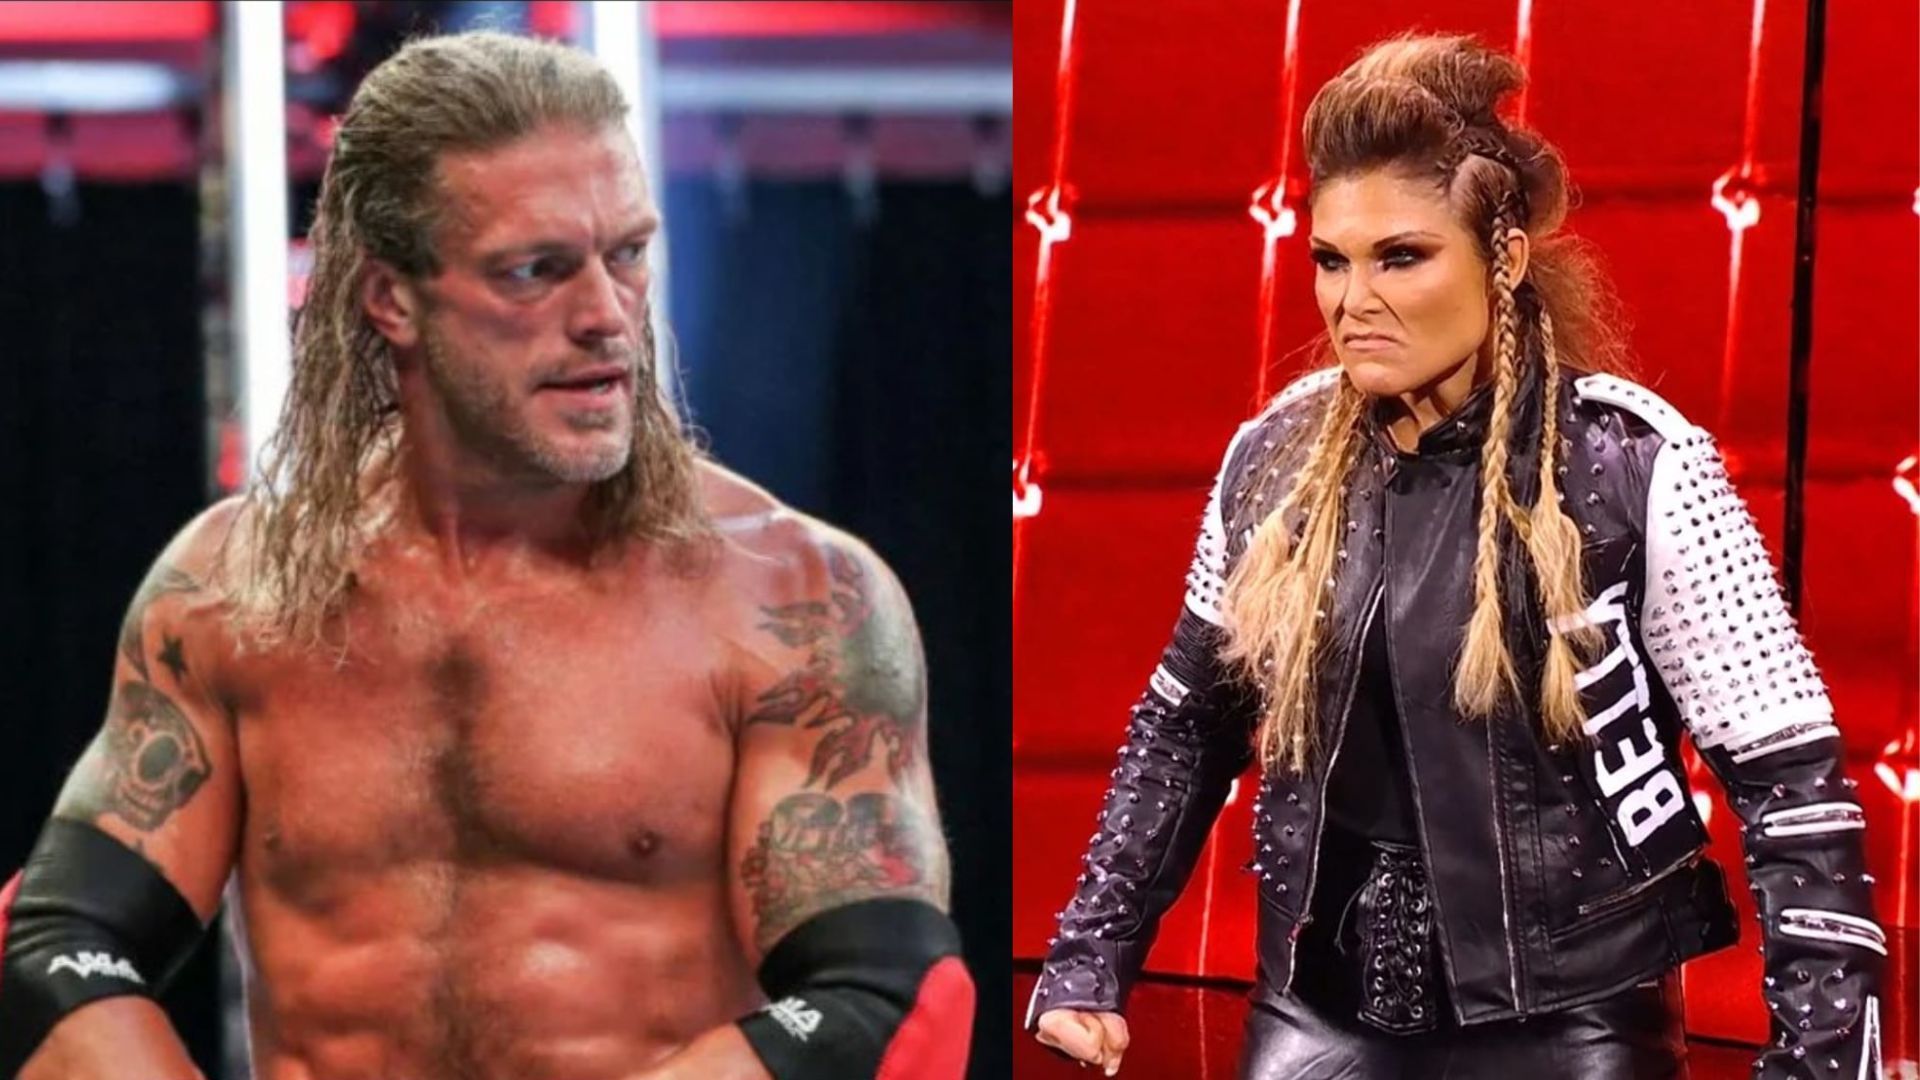 WWE RAW Superstars Edge and Beth Phoenix